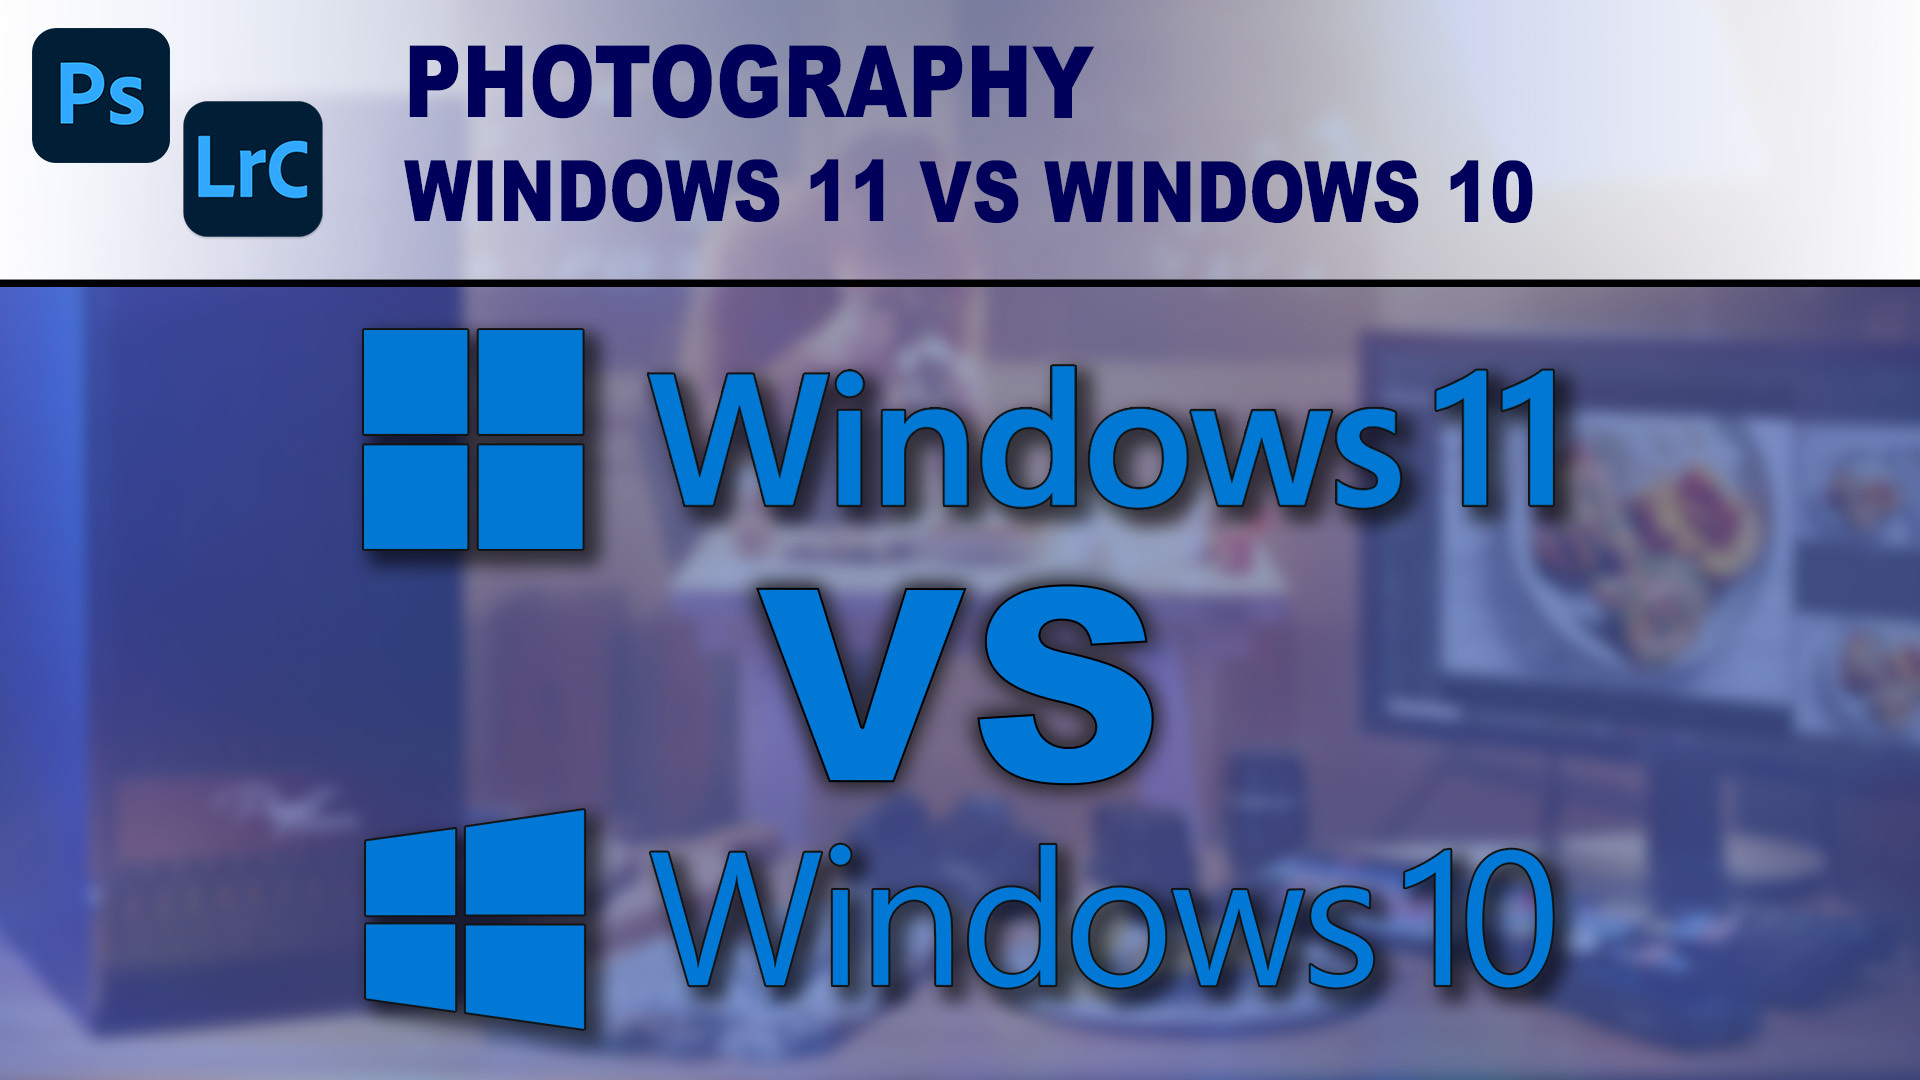 Windows 10 vs Windows 11 for photography